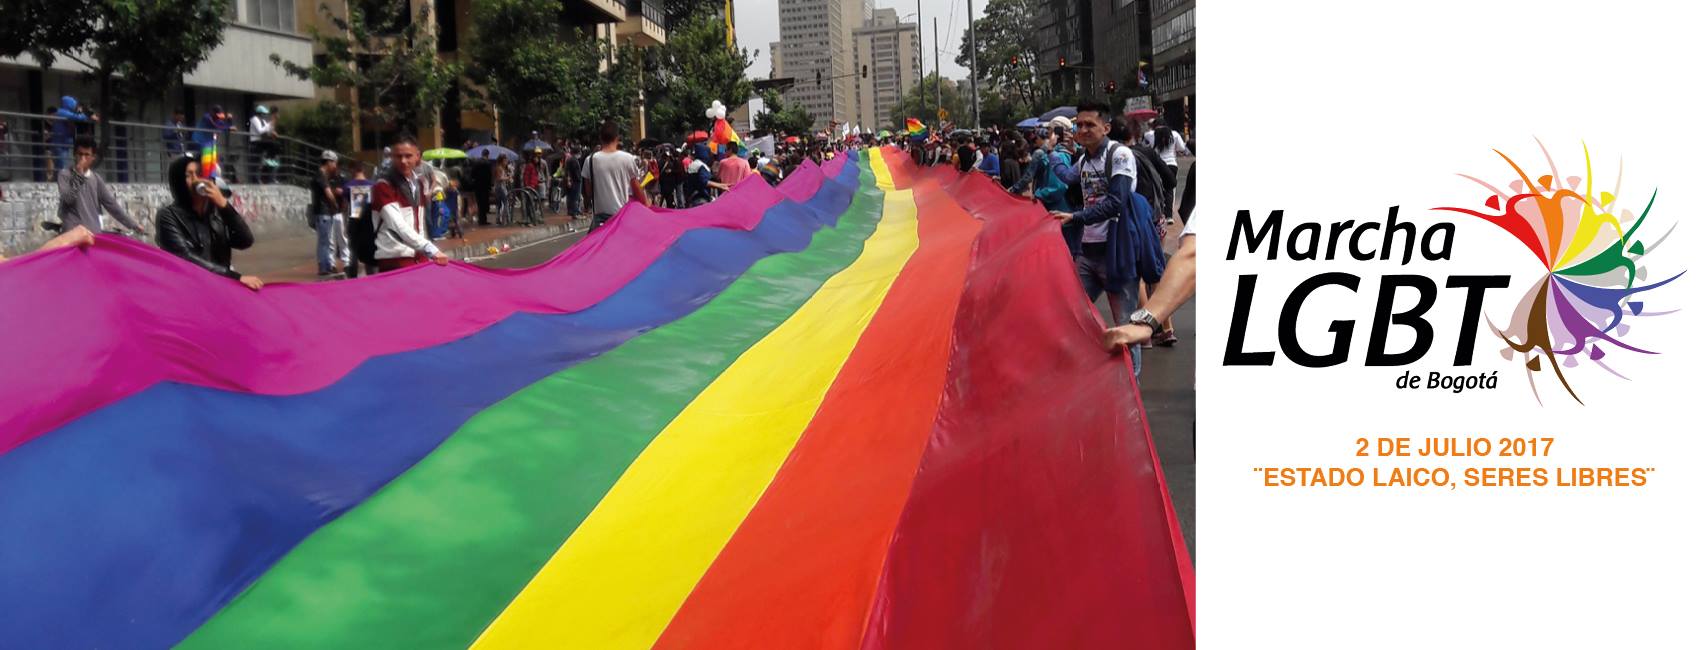  21 Marcha Por La Ciudadania Plena LGBTI Bogot D.C. 